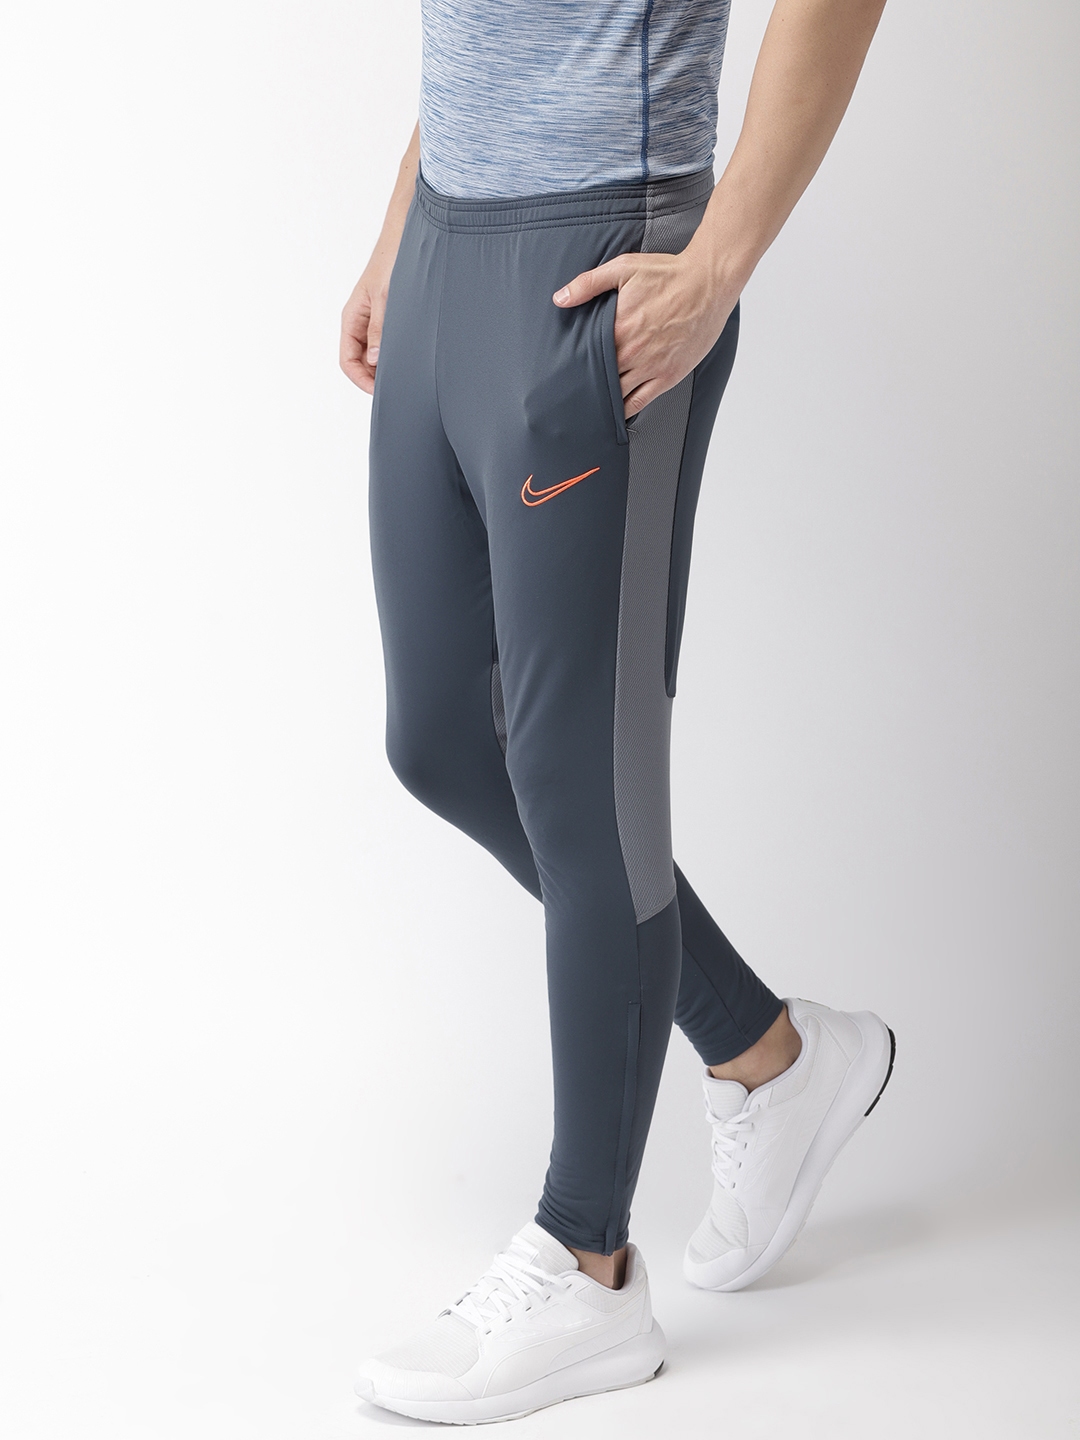 Nike DriFit Tapered Training Pants  Sportspower Zorich Group